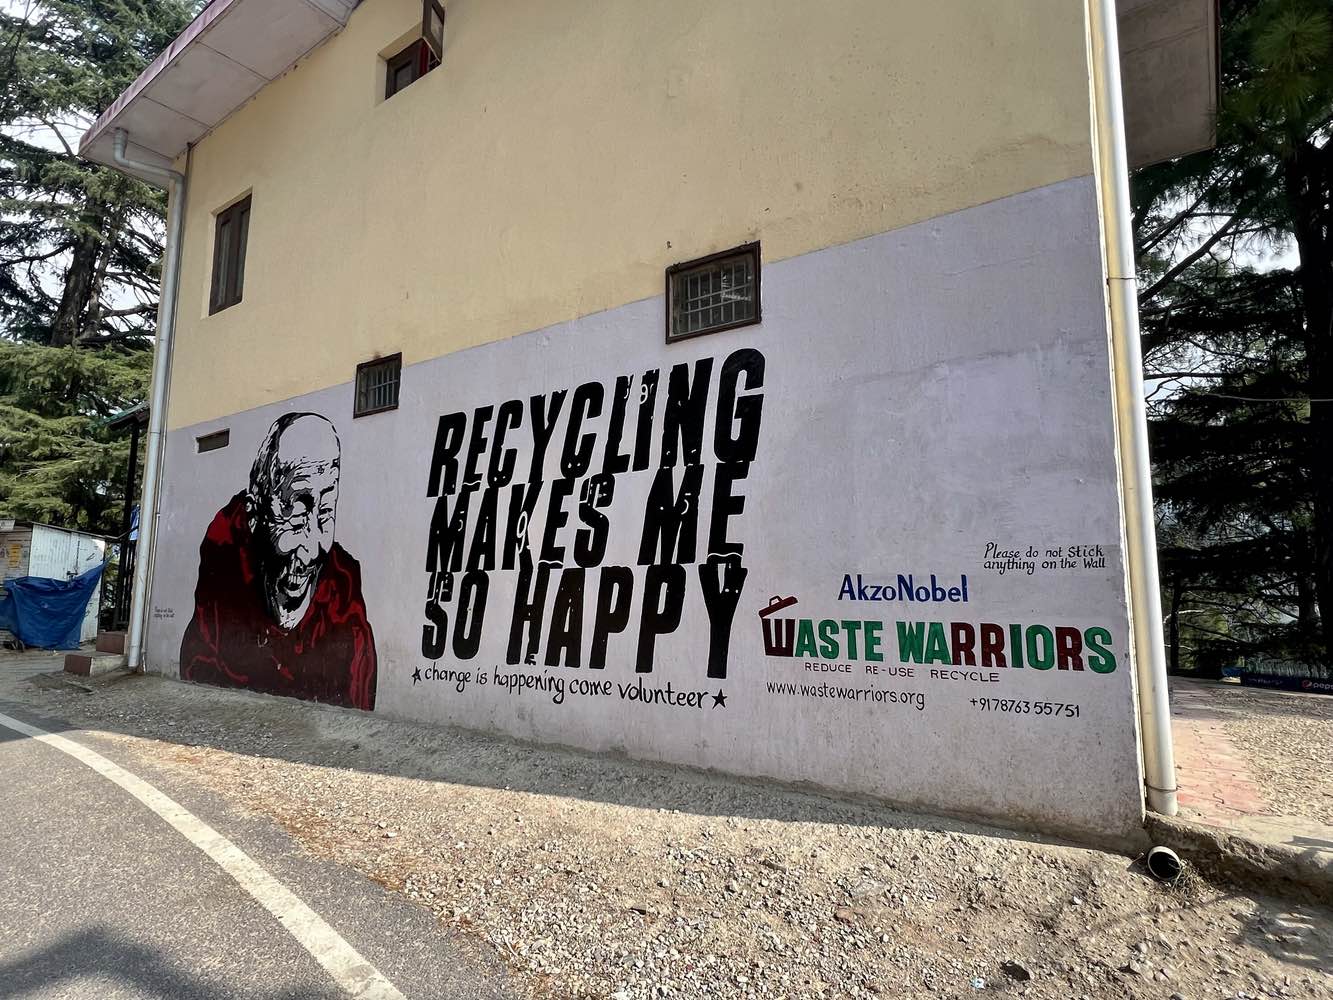 Street art promoting recycling and depicting the Dalai Lama in Dharamshala, India